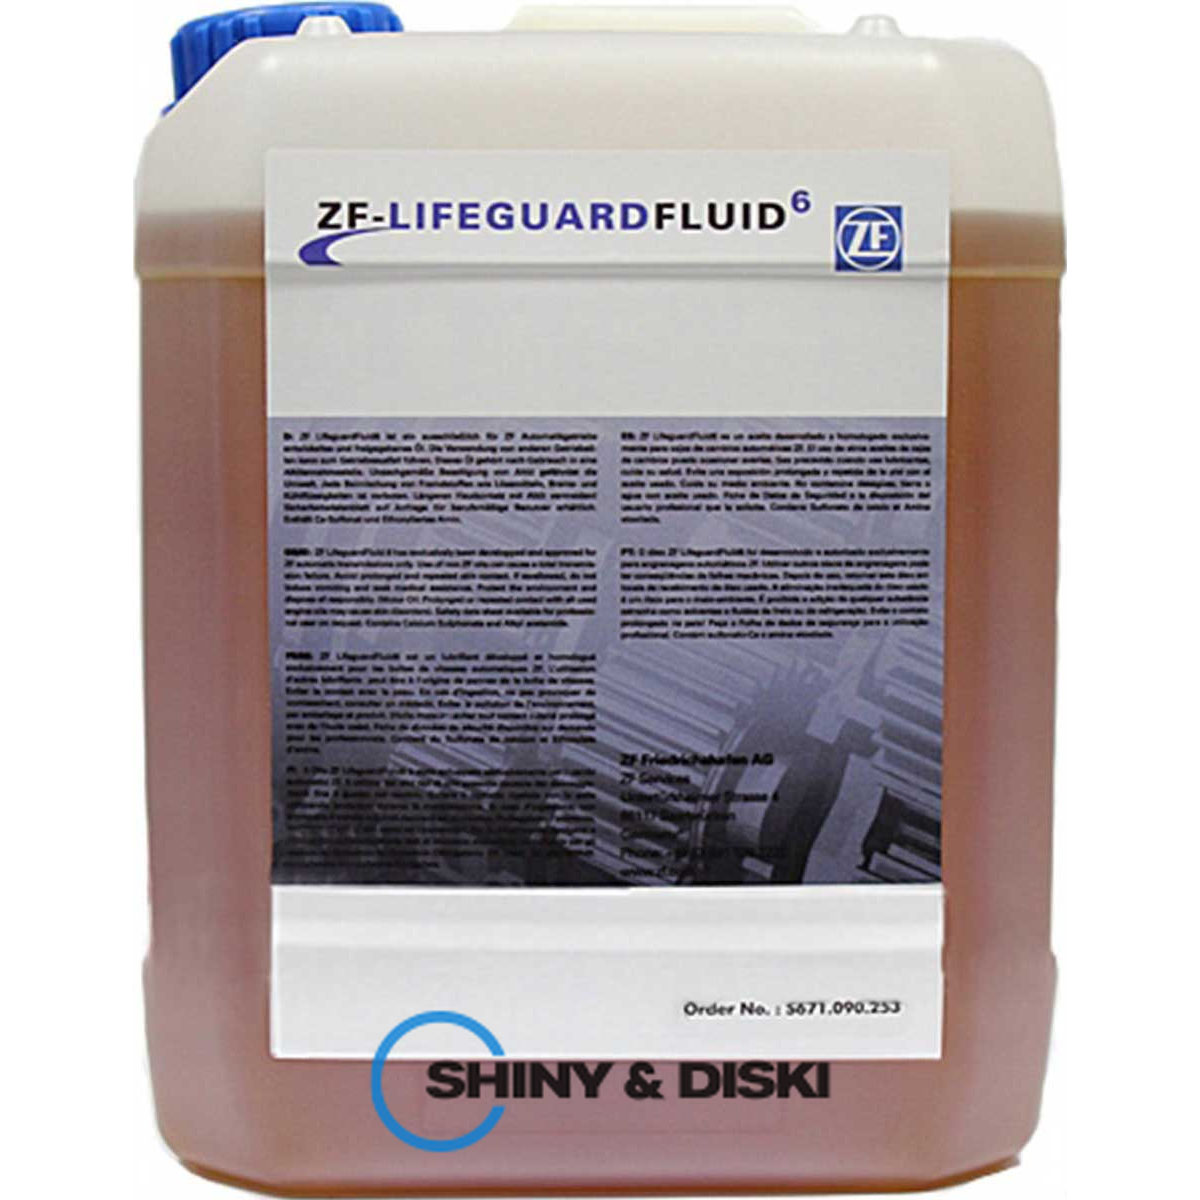 zf lifeguardfluid 6 (20л)